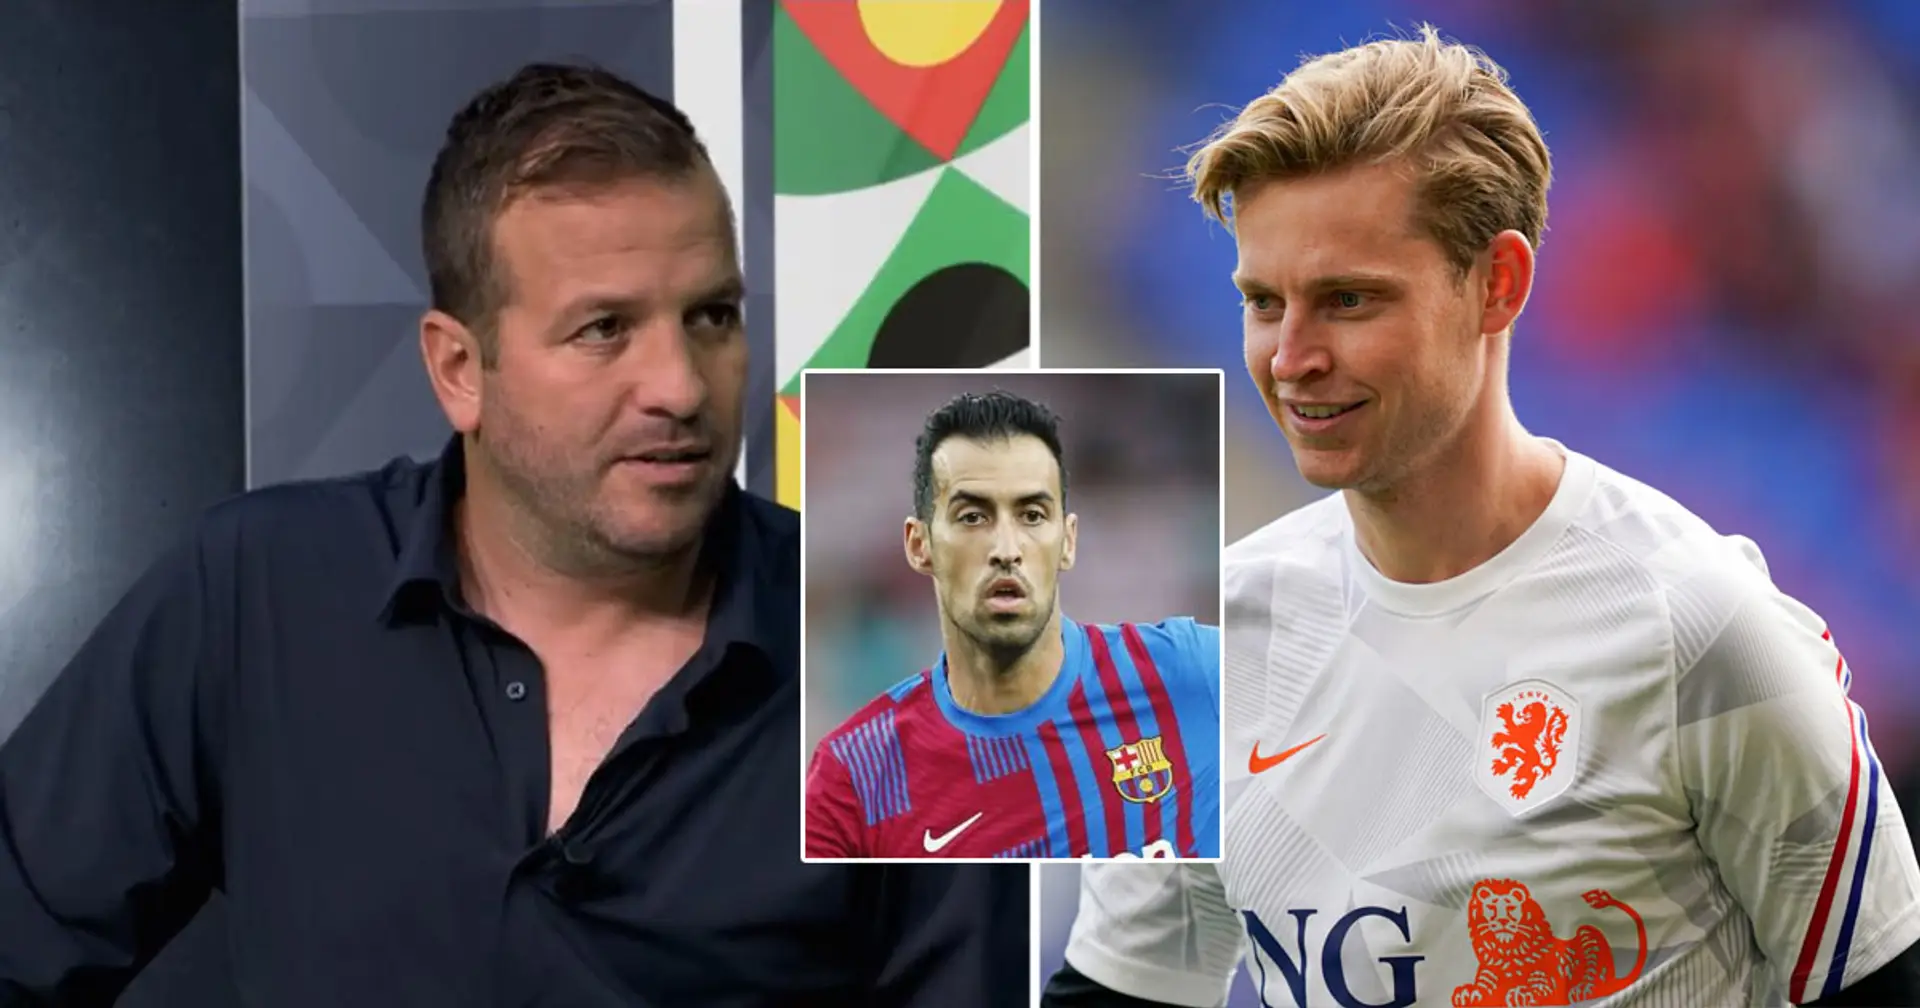 Van der Vaart explains why Frenkie de Jong should accept Man United move